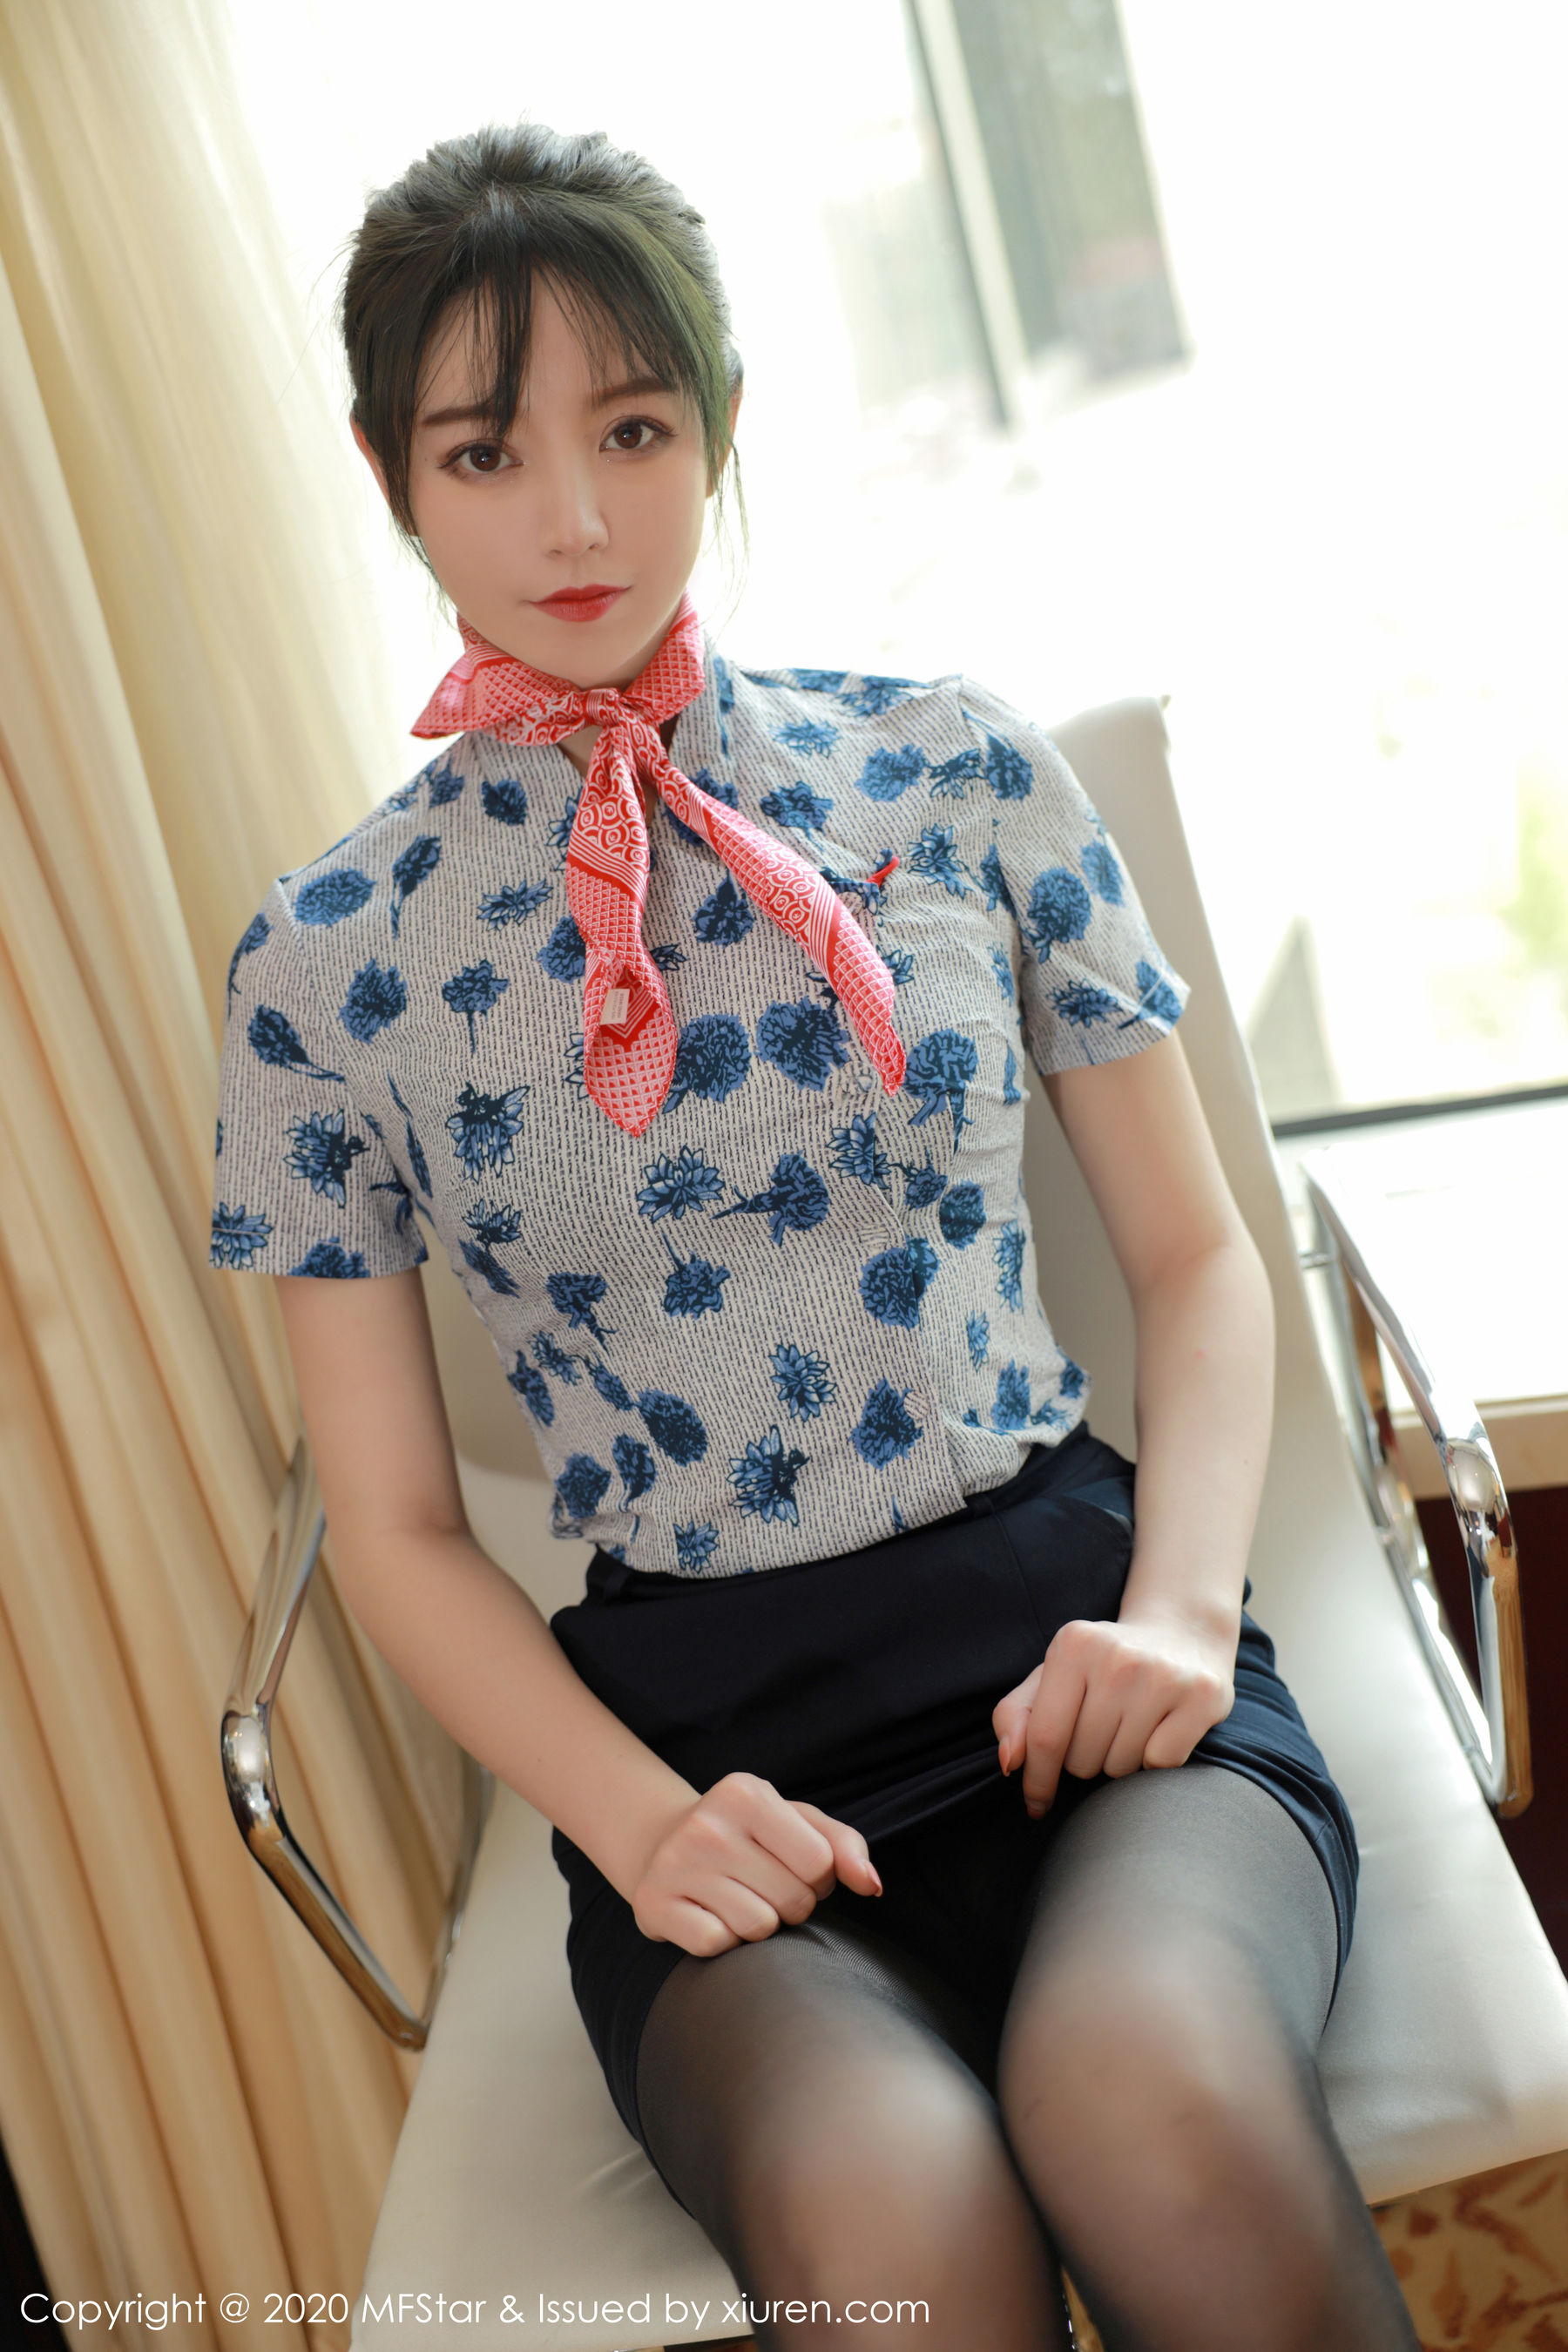 [Model Academy Mfstar] Vol.317 Yoo Youyou “Empty Mail Uniform Series” Photo Collection